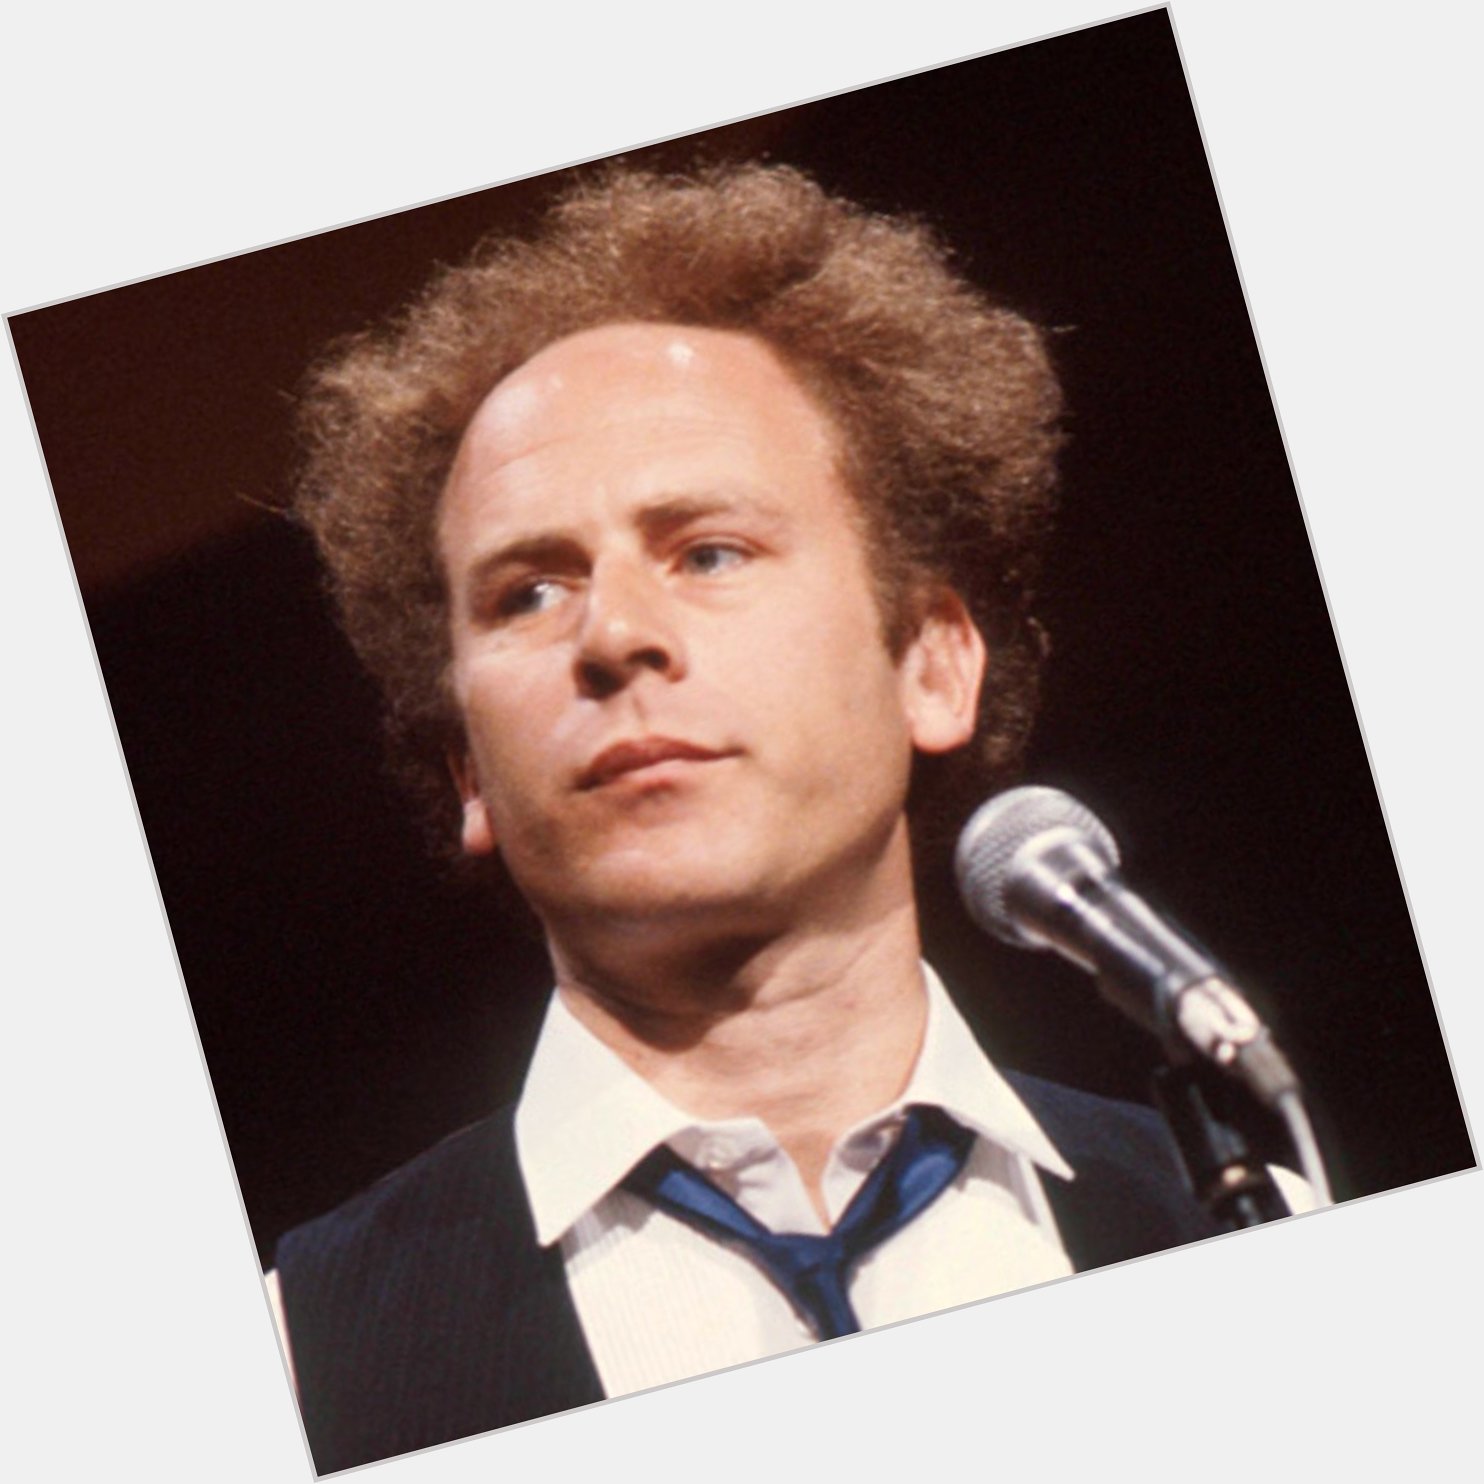 Art Garfunkel is76years old today. He was born on 5 November 1941 Happy birthday Art! 